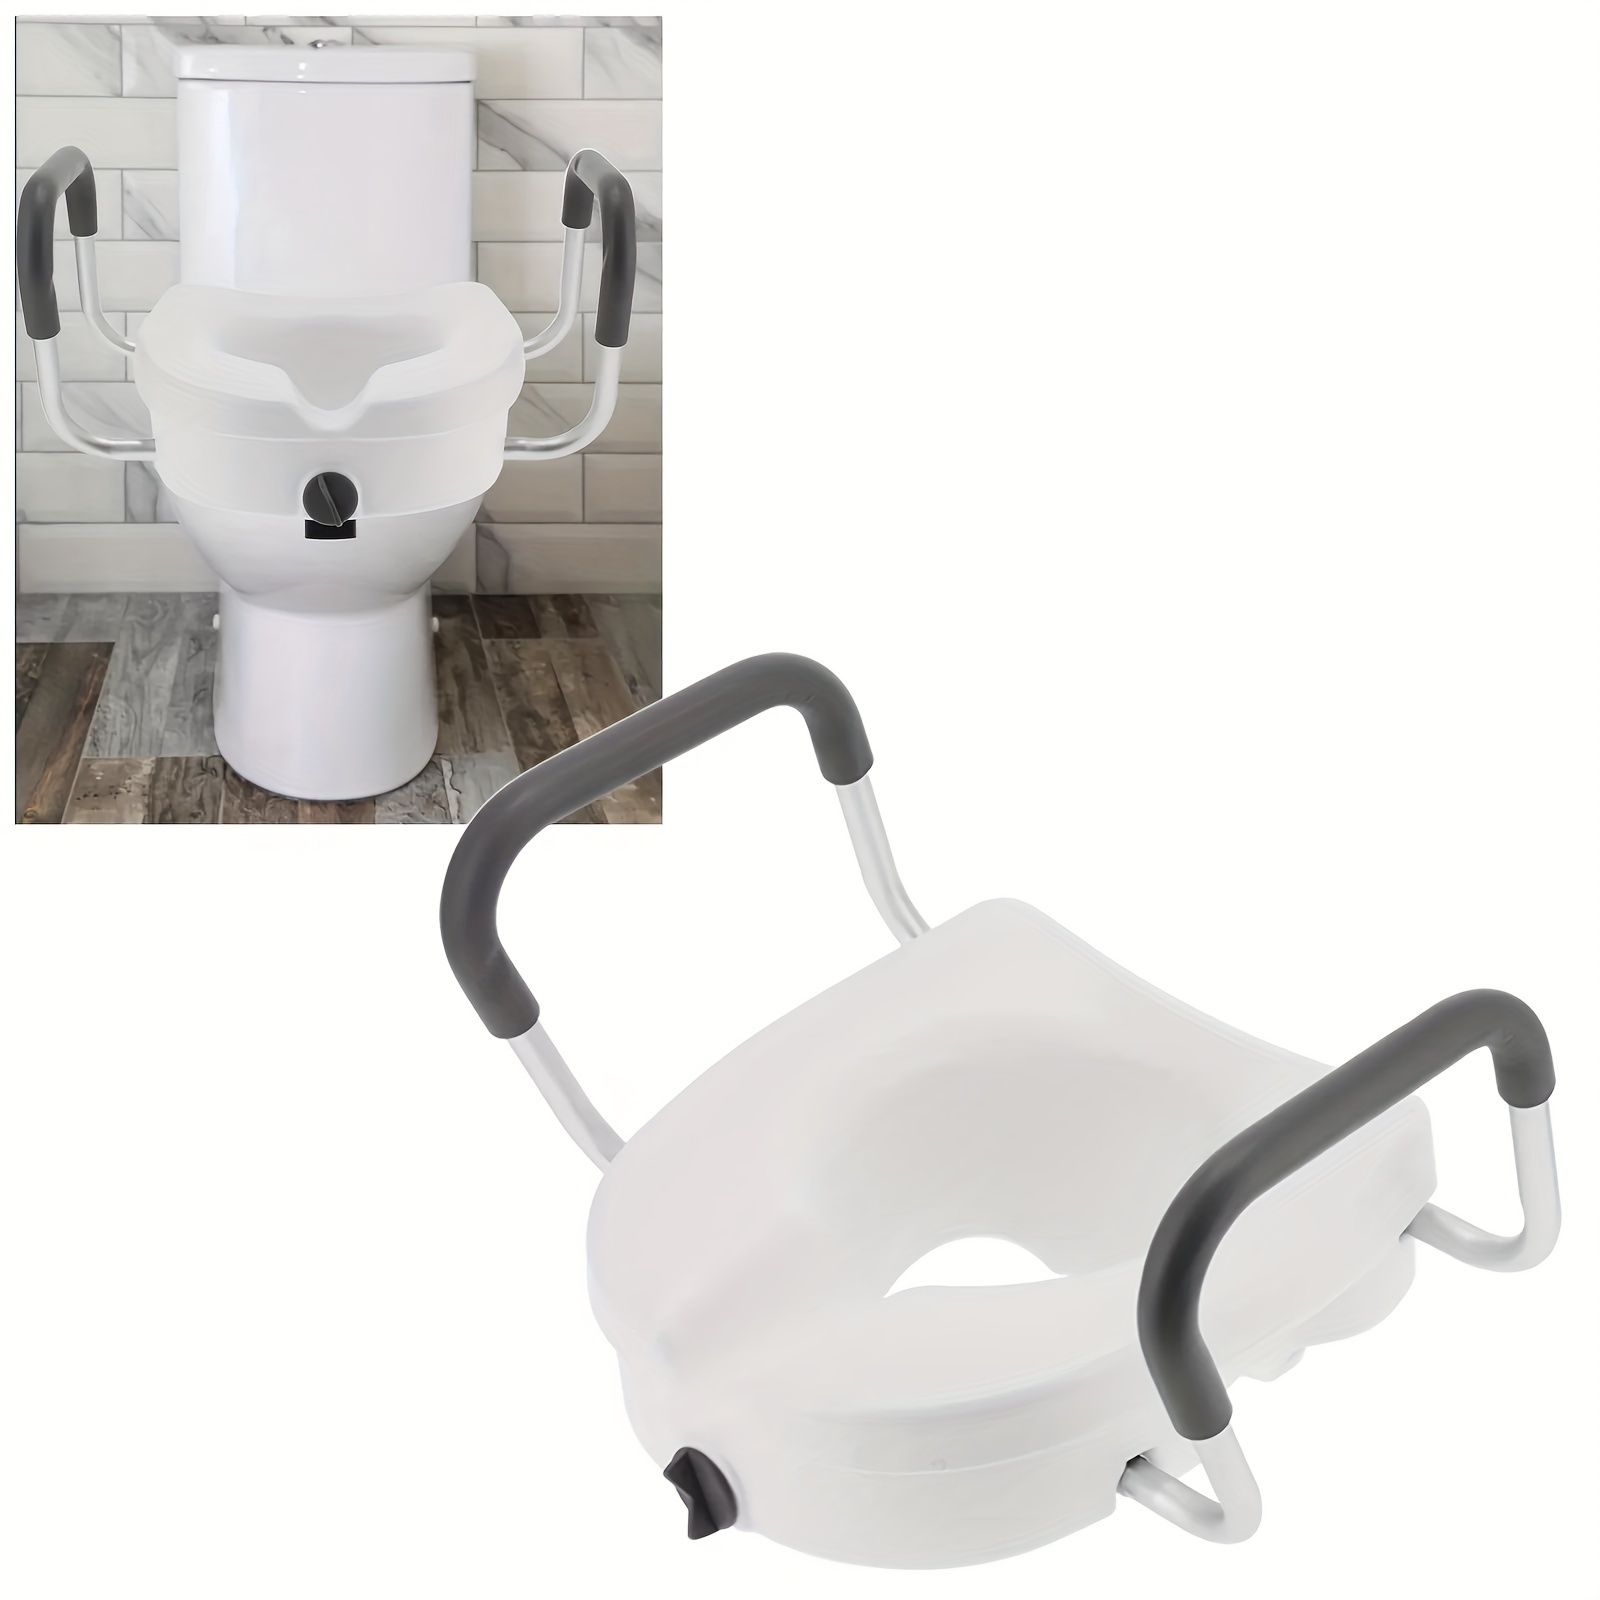 

Raised Toilet Seat With Nonslip Adjustable Armrest Bathroom Supplies For Seniors Pregnant Women